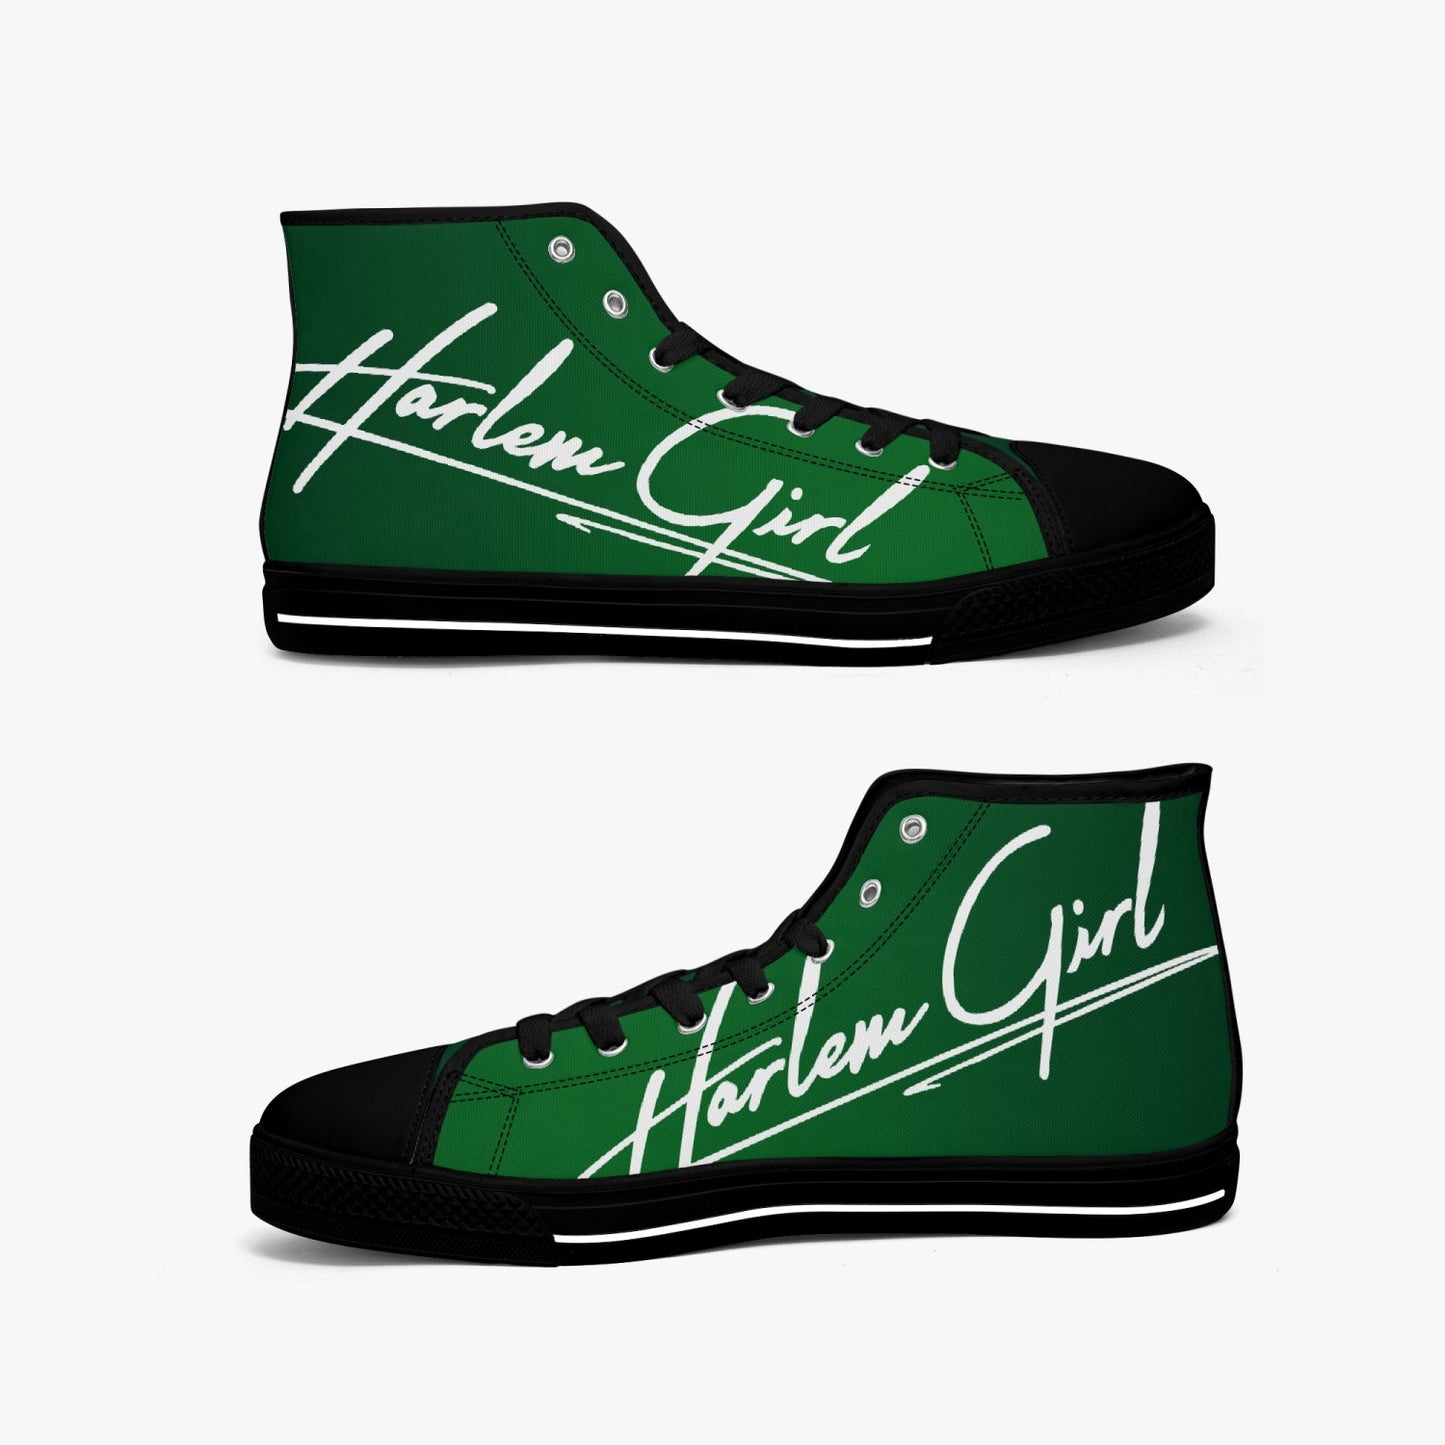 HB Harlem Girl "Lenox Ave" Classic High Top - Emerald - Women (Black or White Soles)